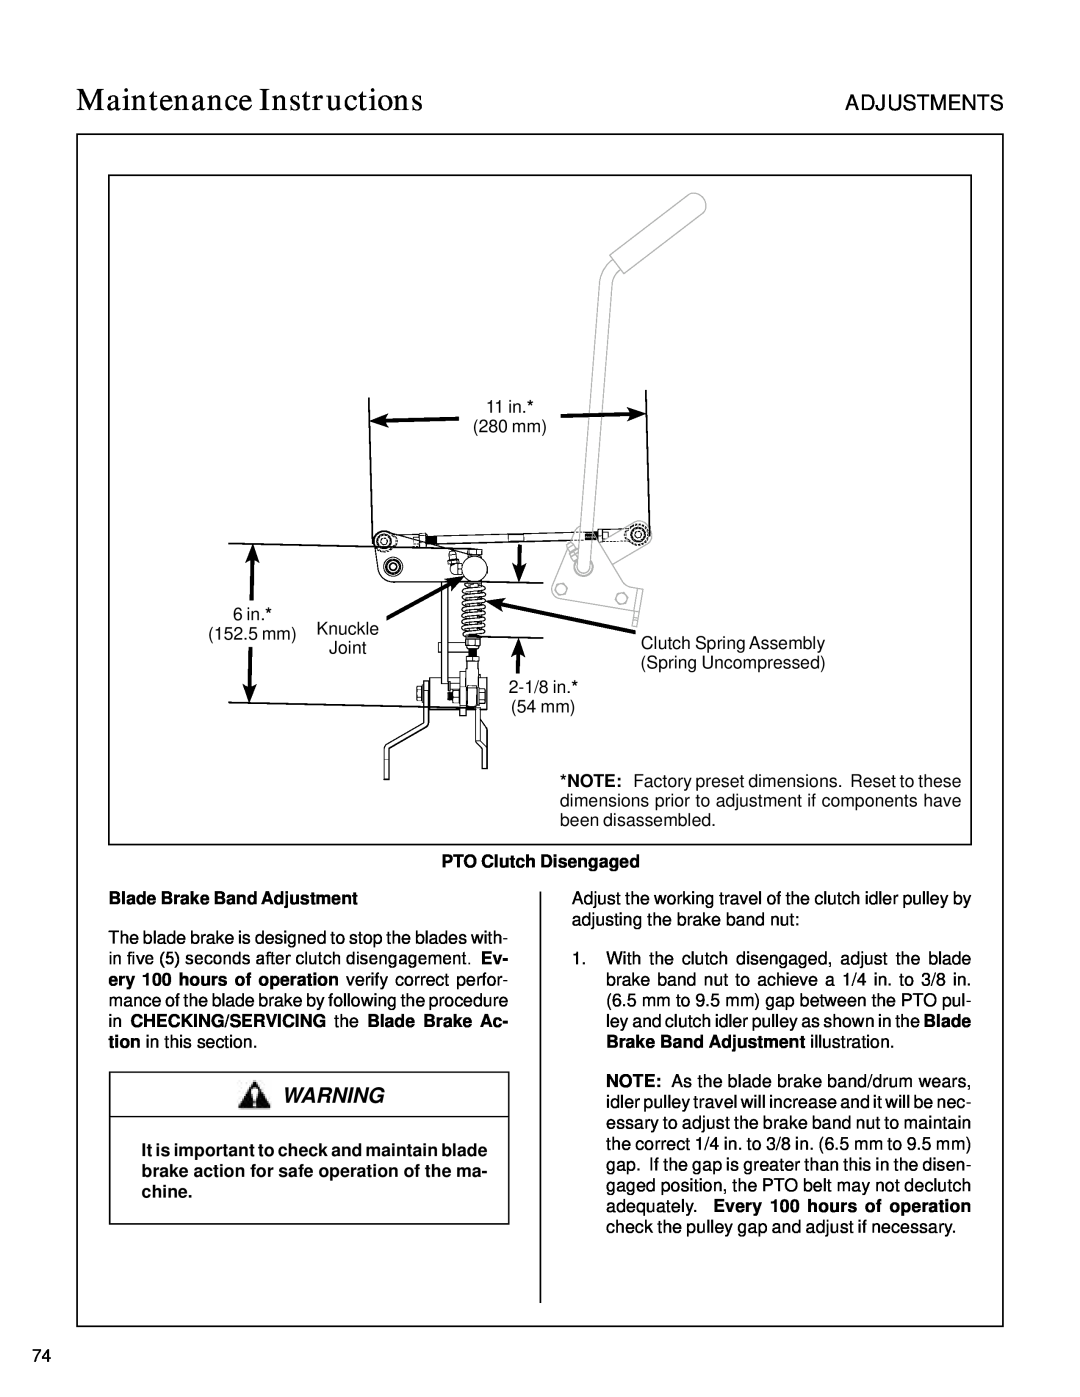 Walker S14 manual PTO Clutch Disengaged, Blade Brake Band Adjustment, Maintenance Instructions, Adjustments 